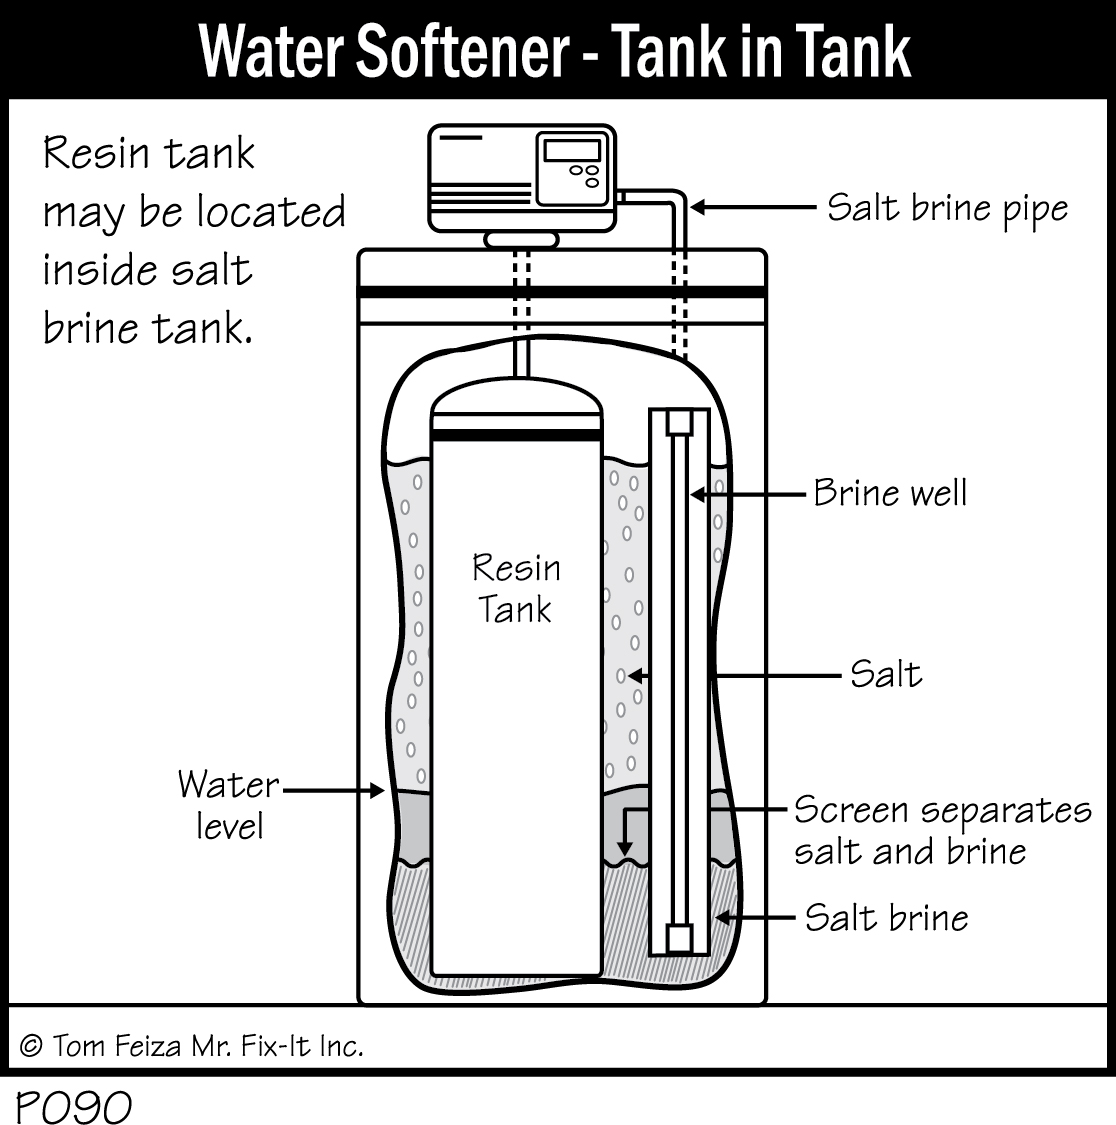 P090 - Water Softener - Tank in Tank